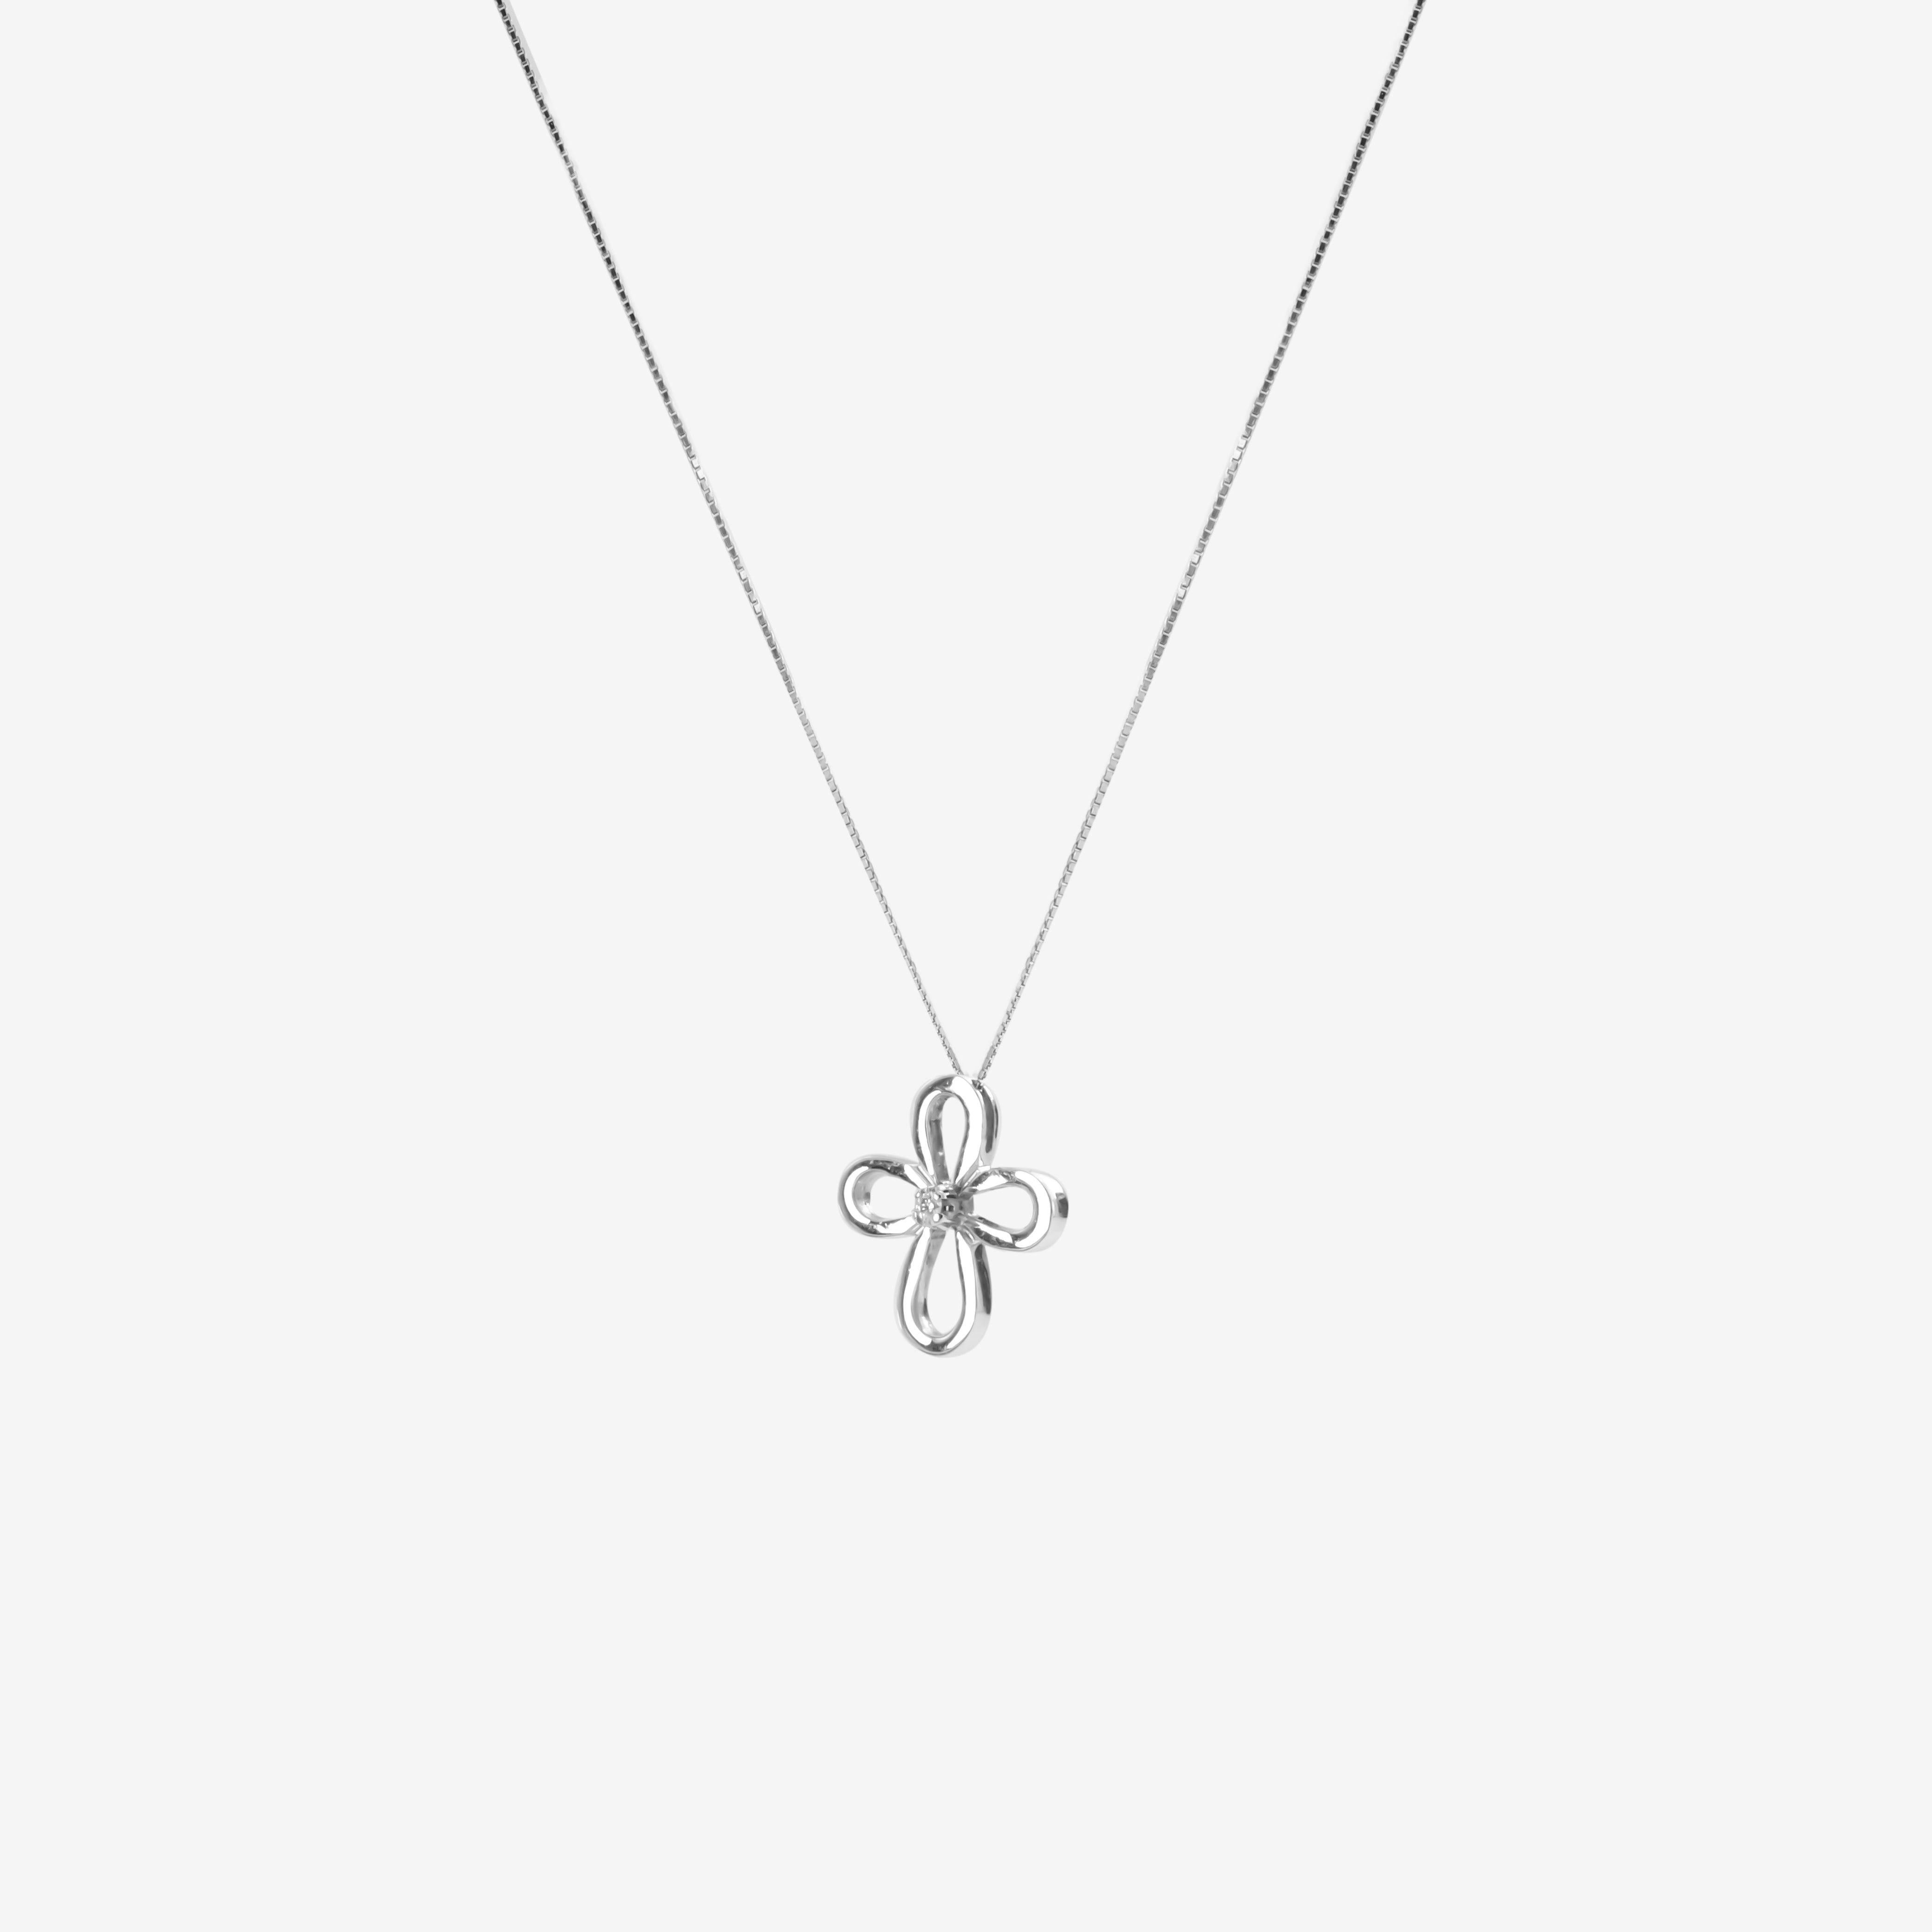 Empty cross necklace with diamond